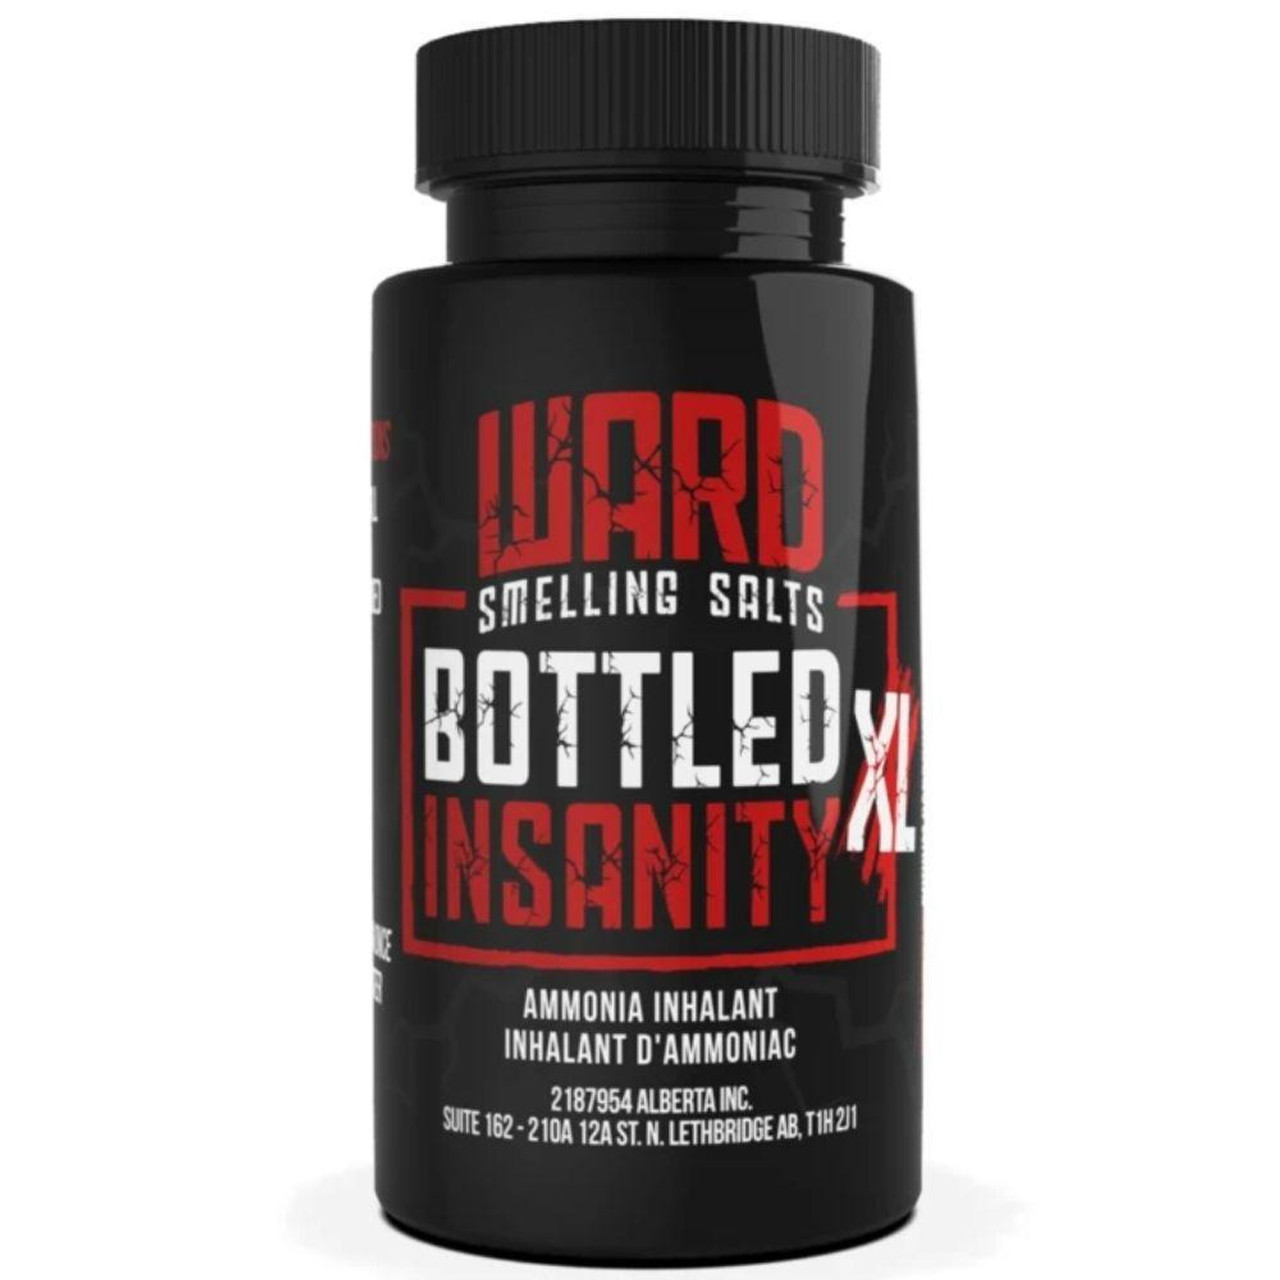 Ward Smelling Salts Bottled Insanity XL Powerlifter Smelling Salts